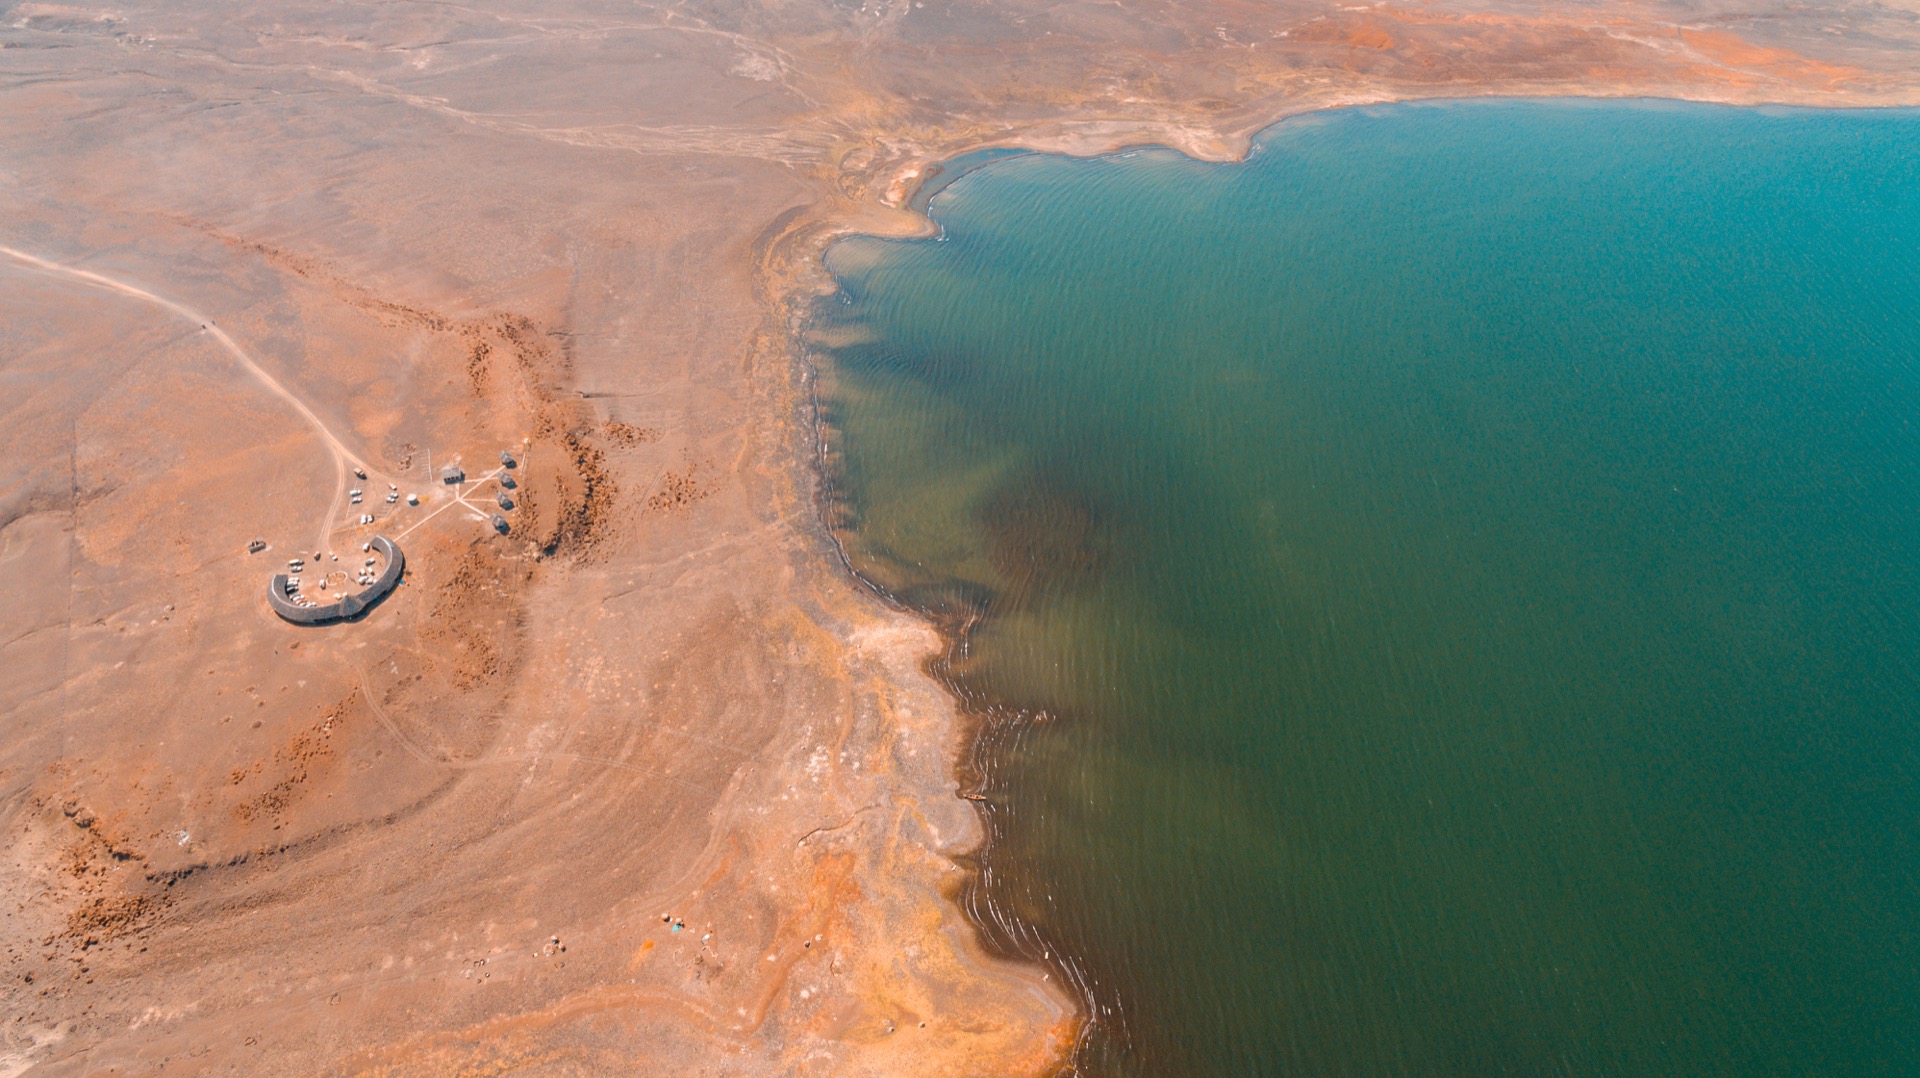 Le lac Turkana, Kenya. © Moiz, Adobe Stock